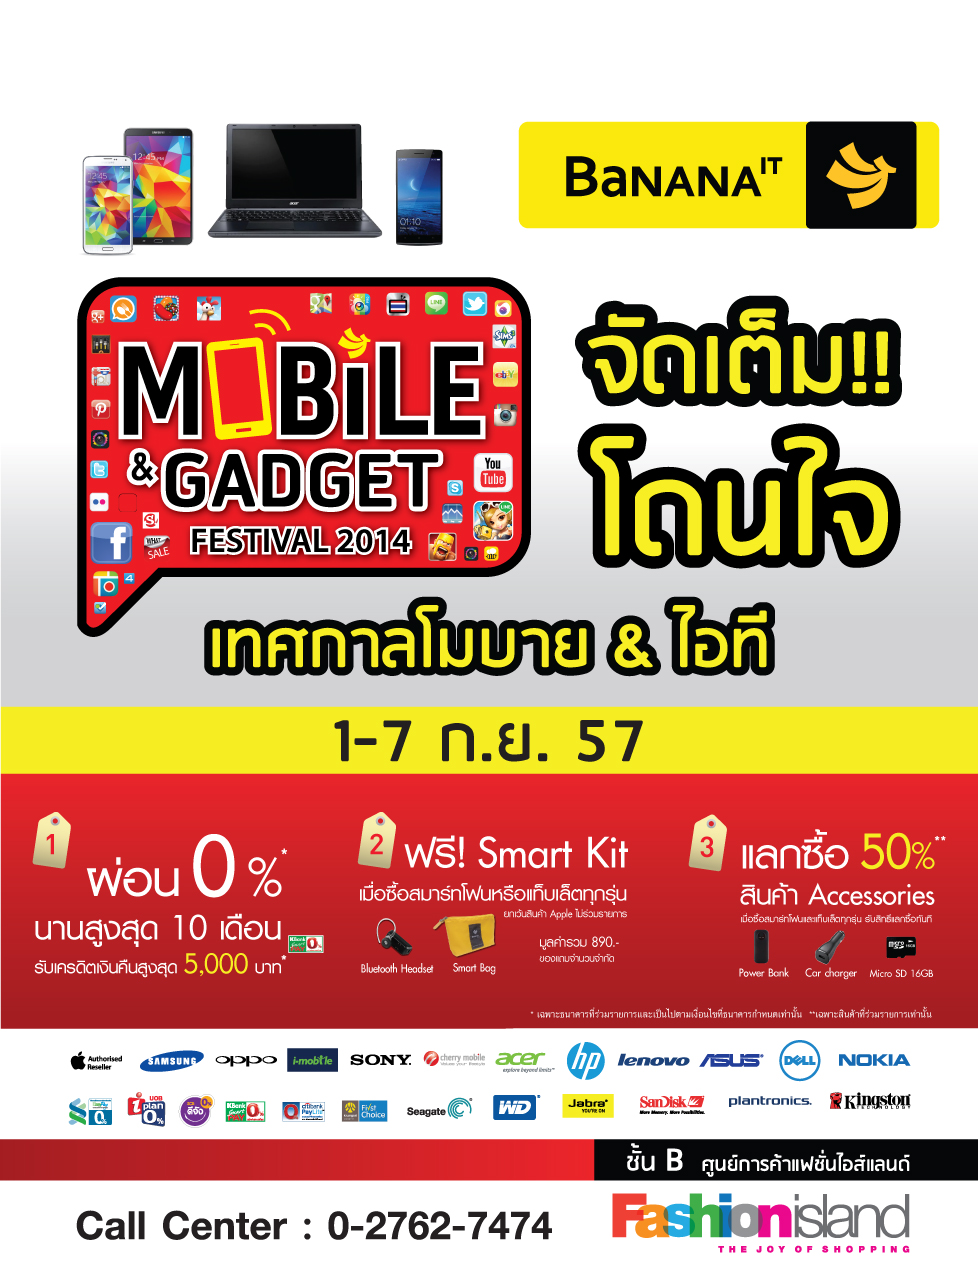 MobileGadget-bananaIT